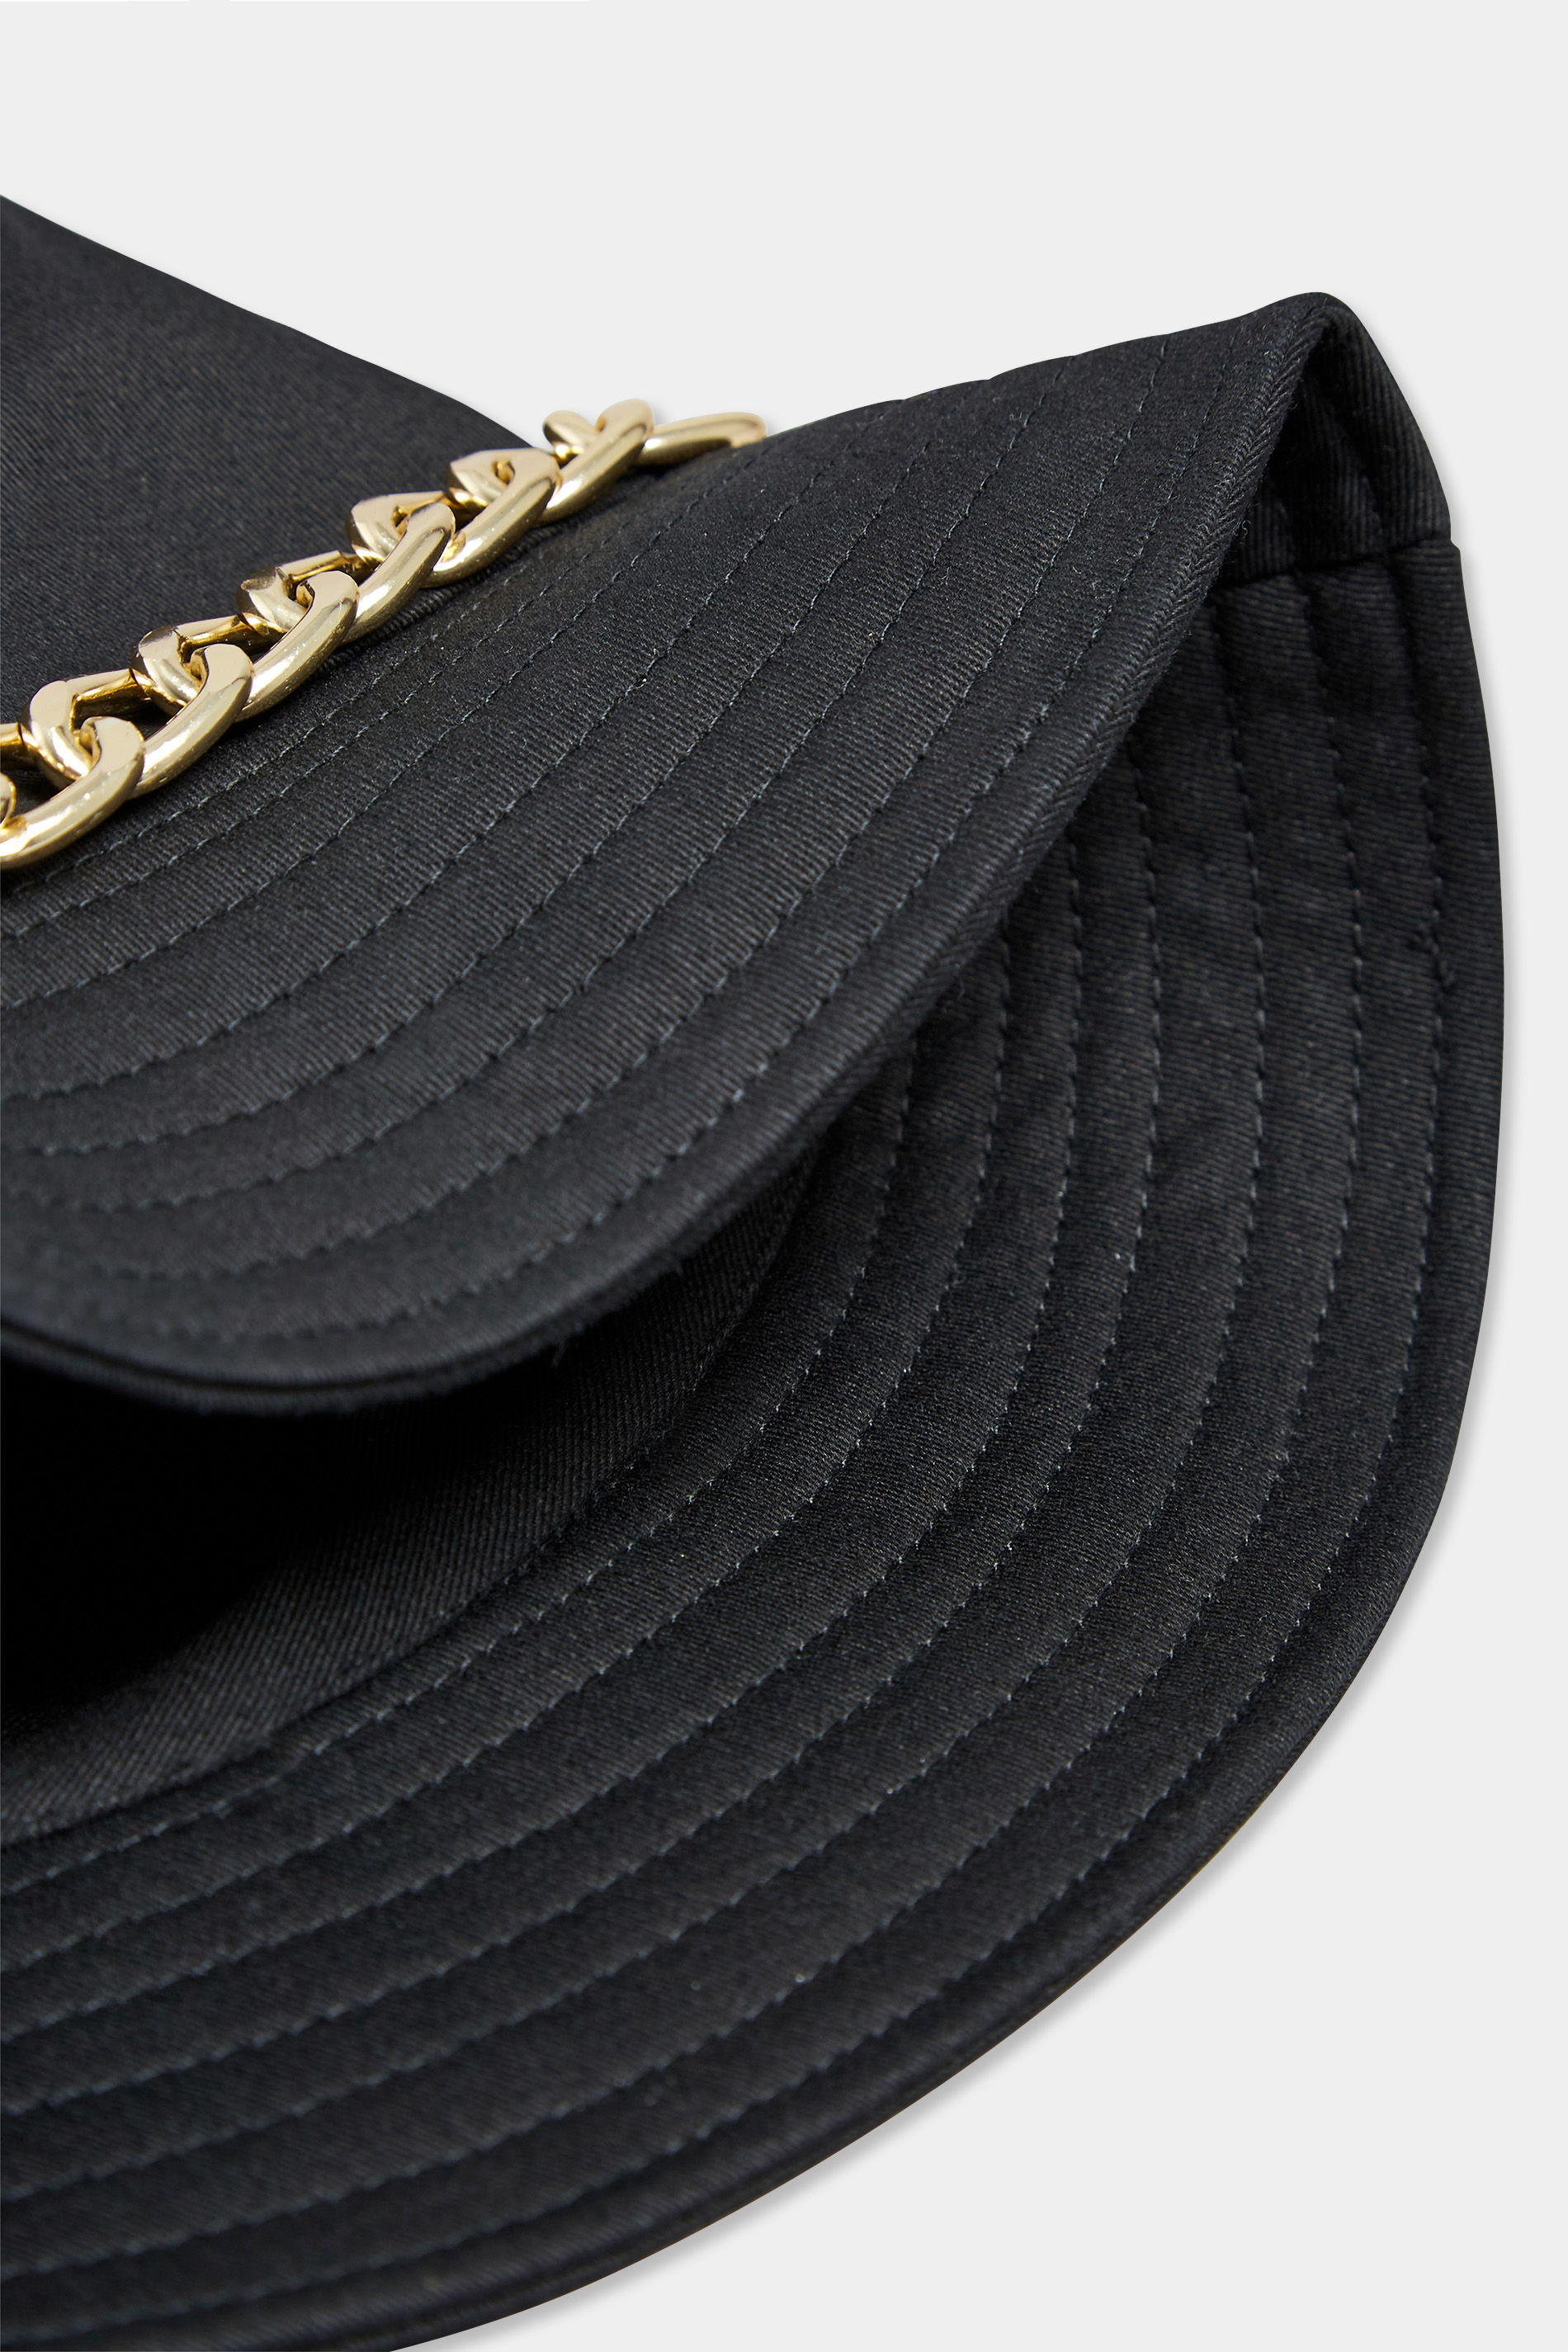 Black Chain Denim Look Bucket Hat | Yours Clothing  3